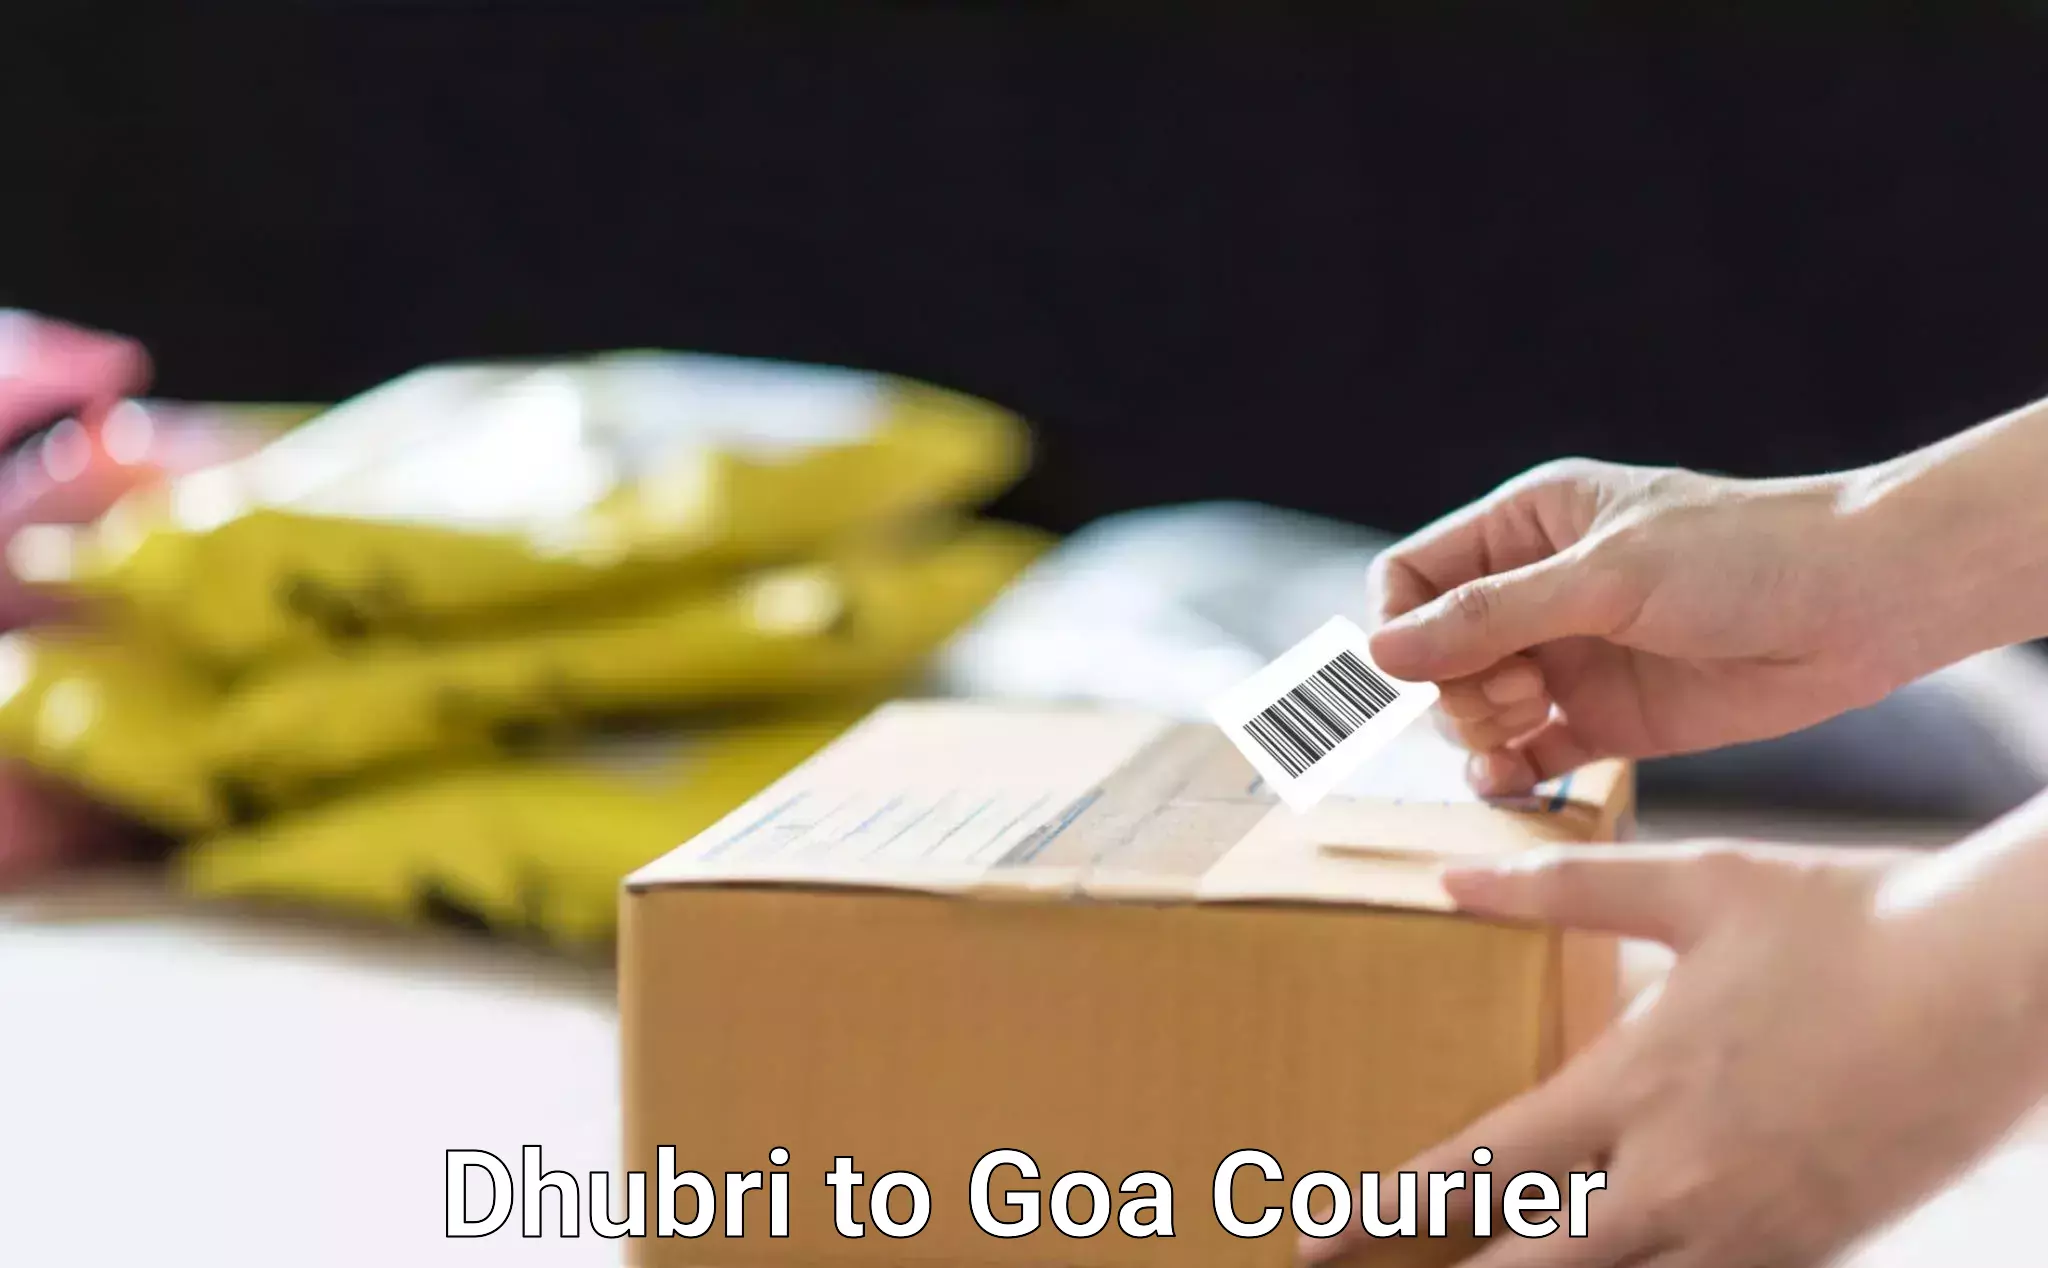 Global shipping networks Dhubri to Goa